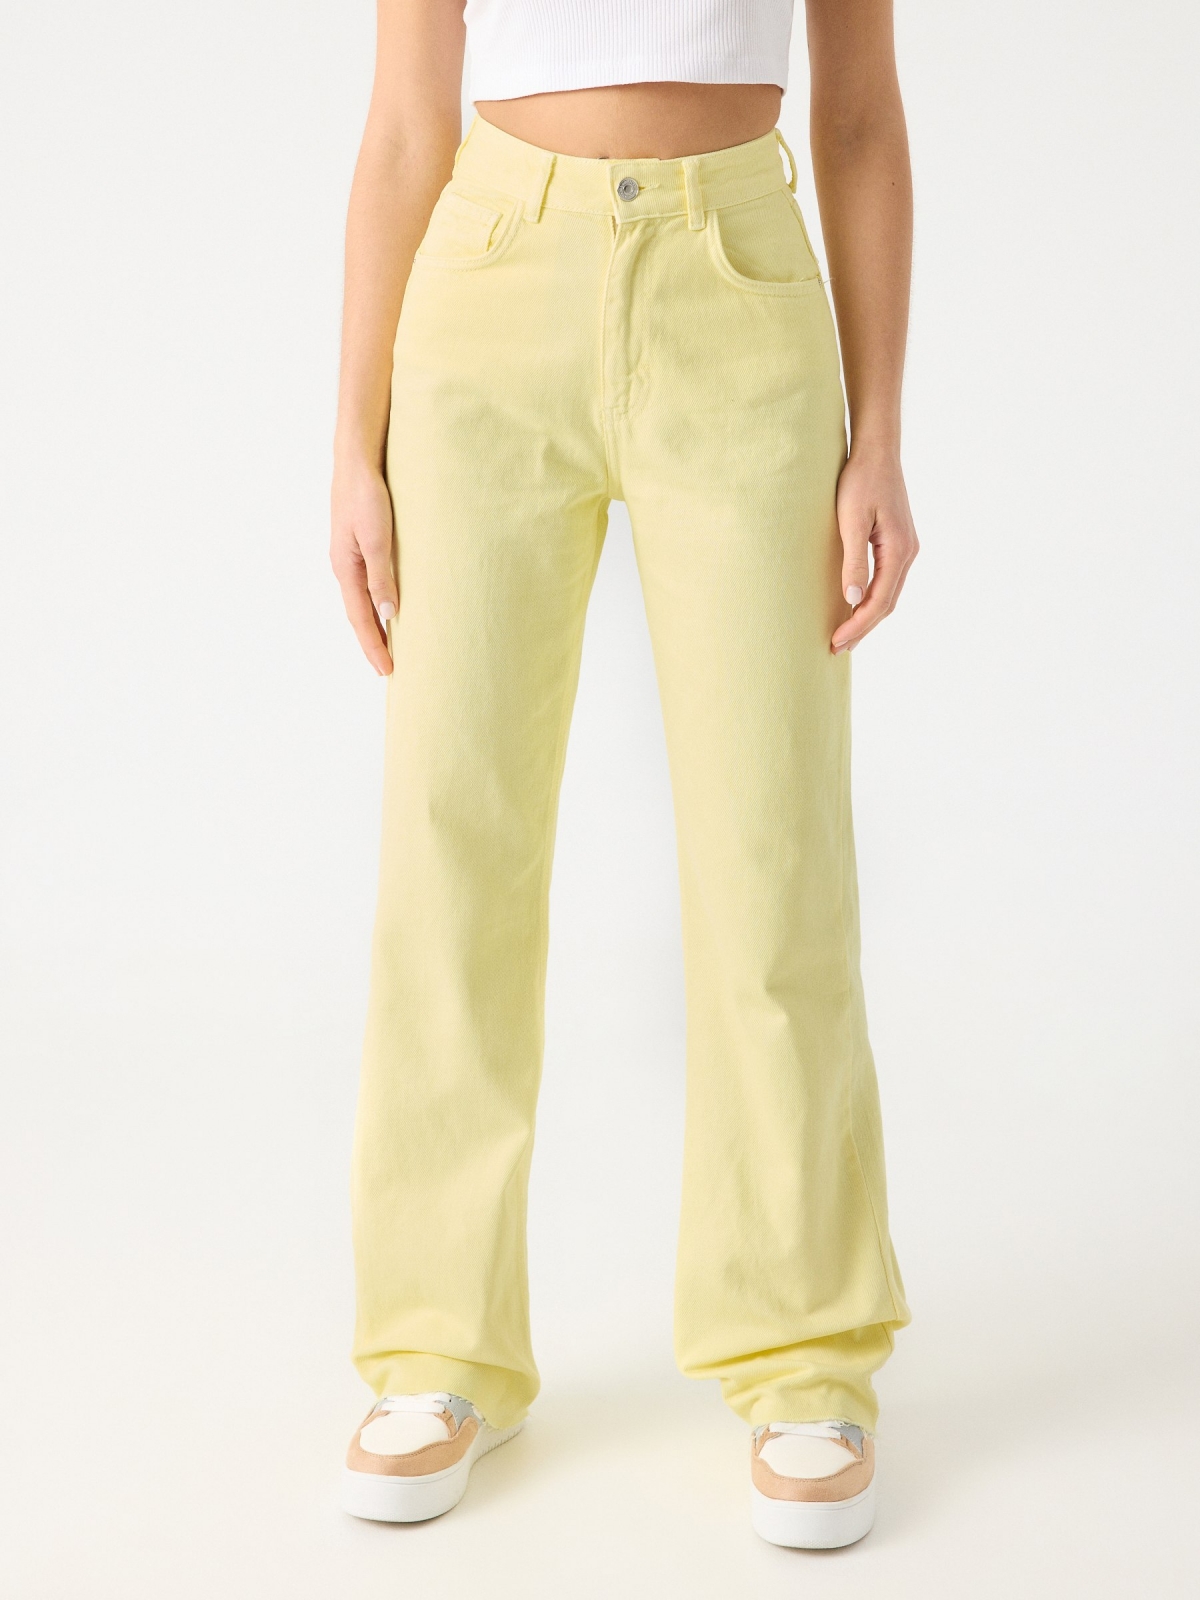 Jeans wide leg cinco bolsillos amarillo claro vista media frontal